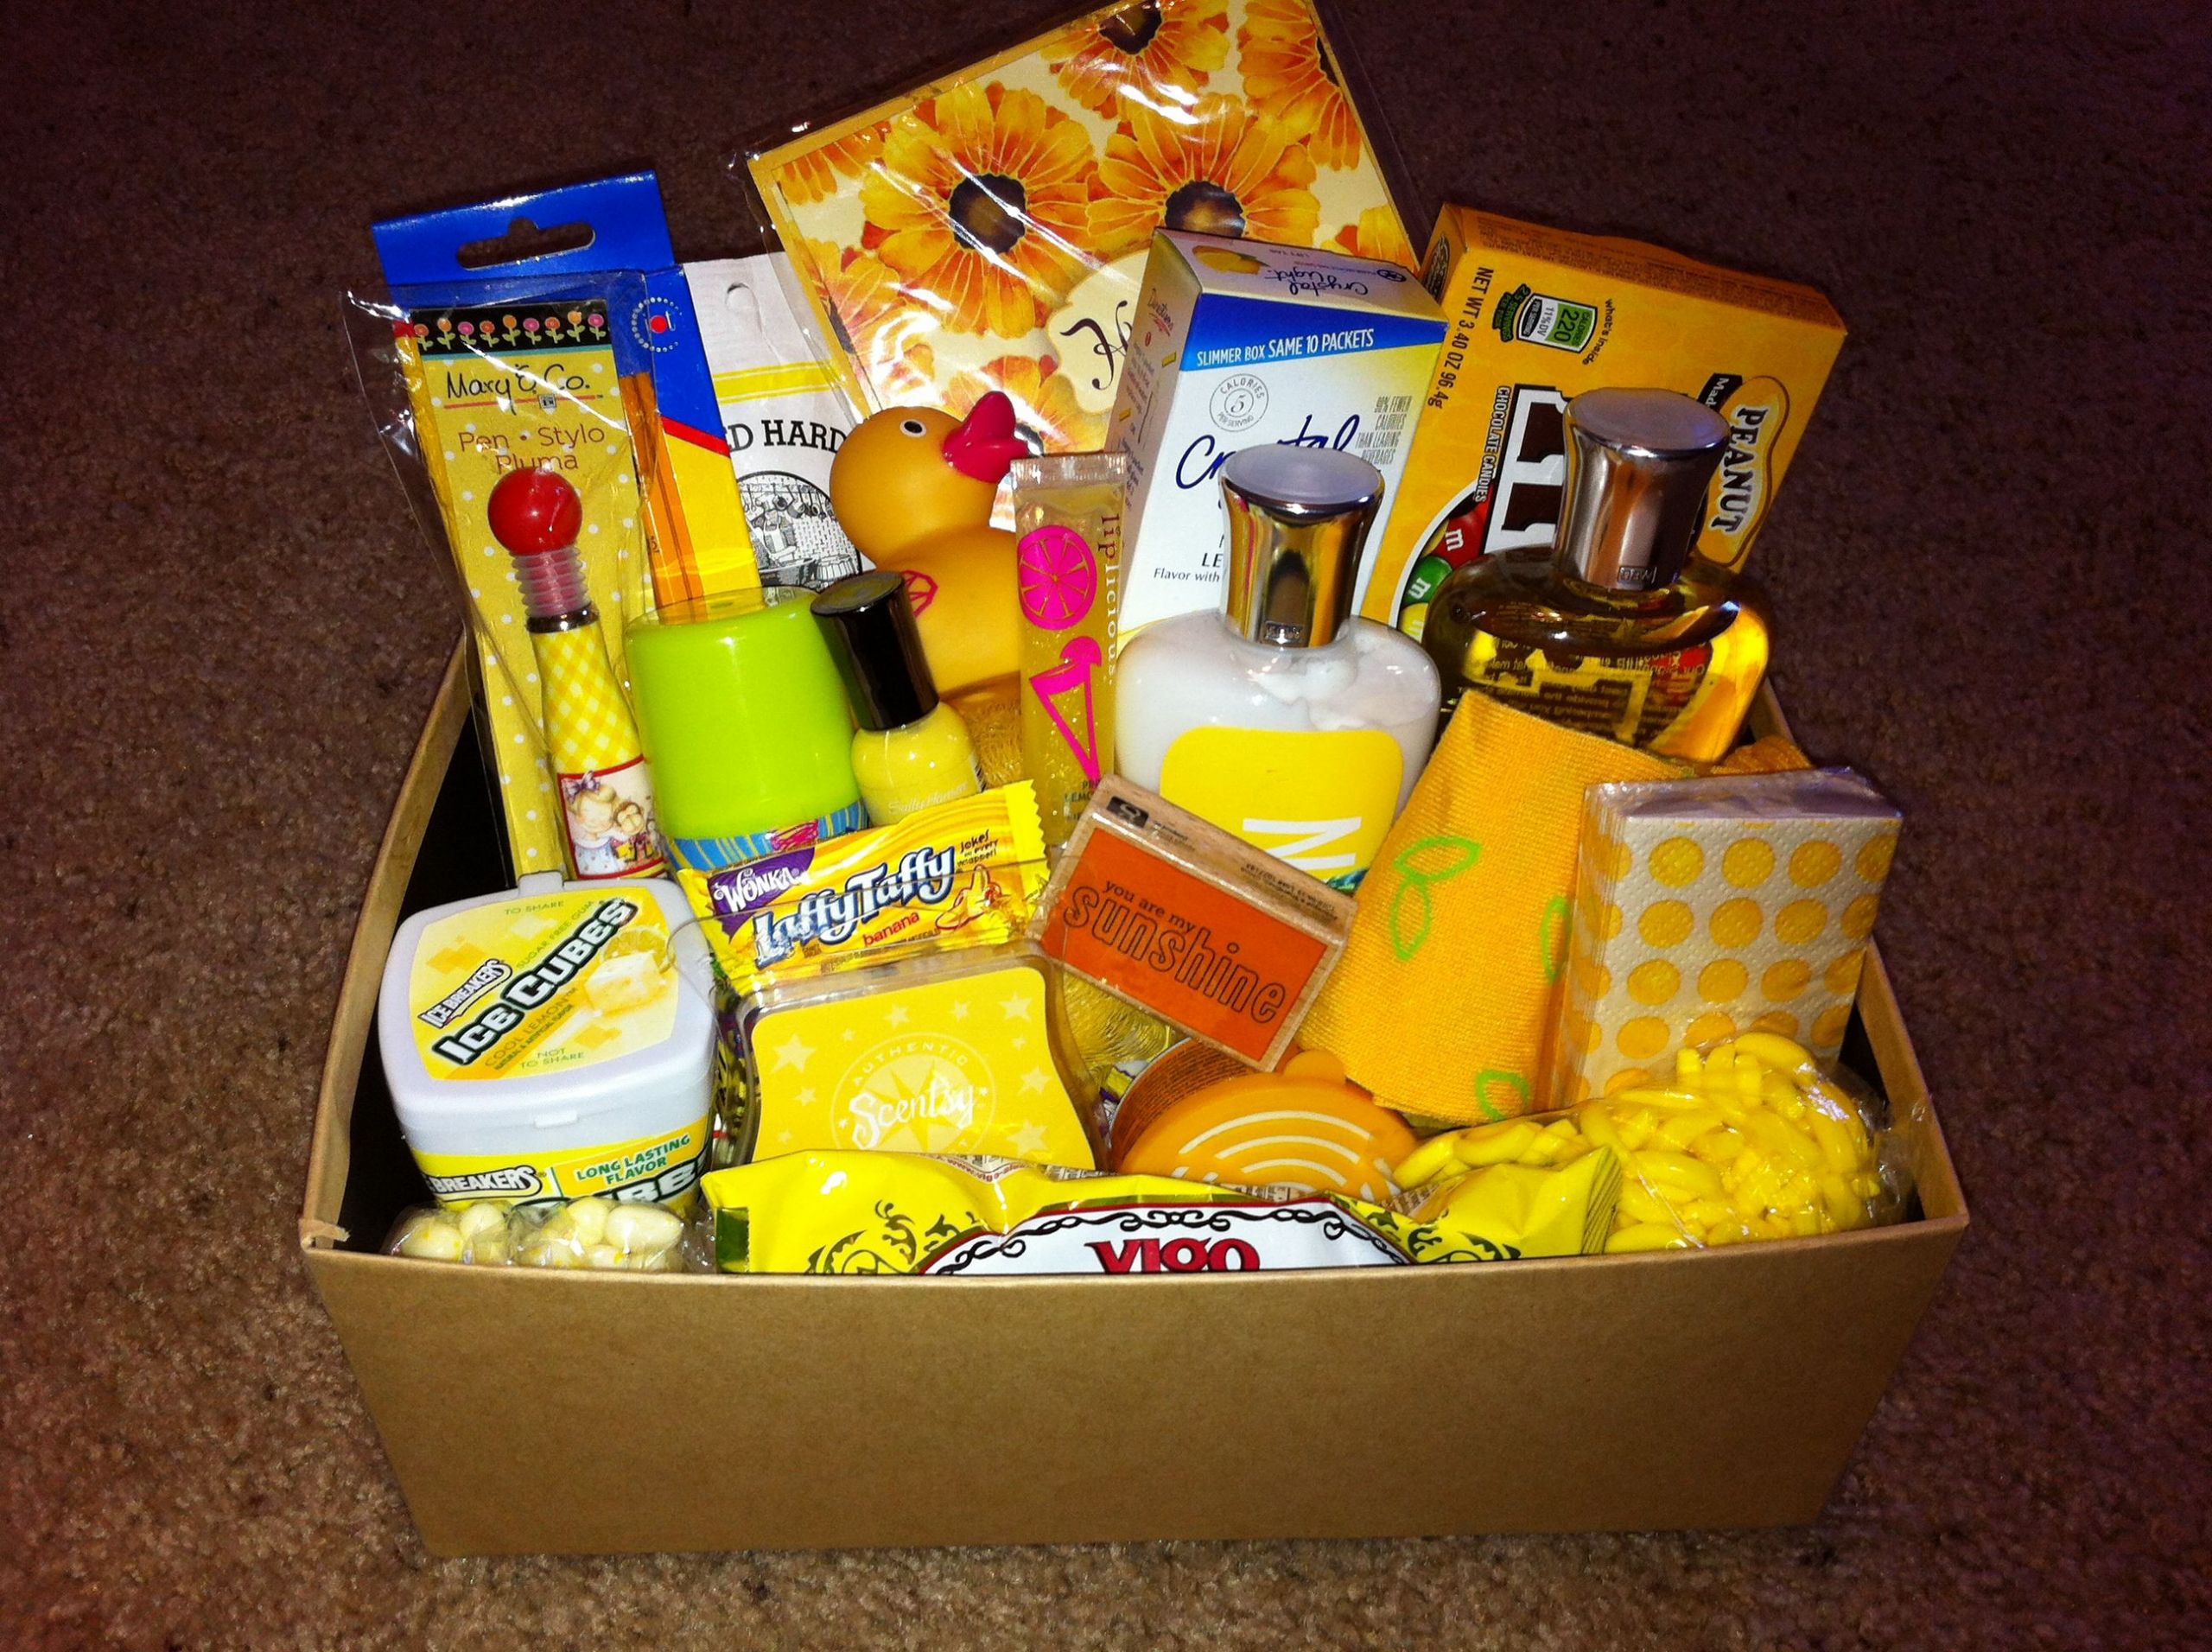 Best Friend Birthday Gift Basket Ideas
 "Box of sunshine" my best friend made this for my birthday